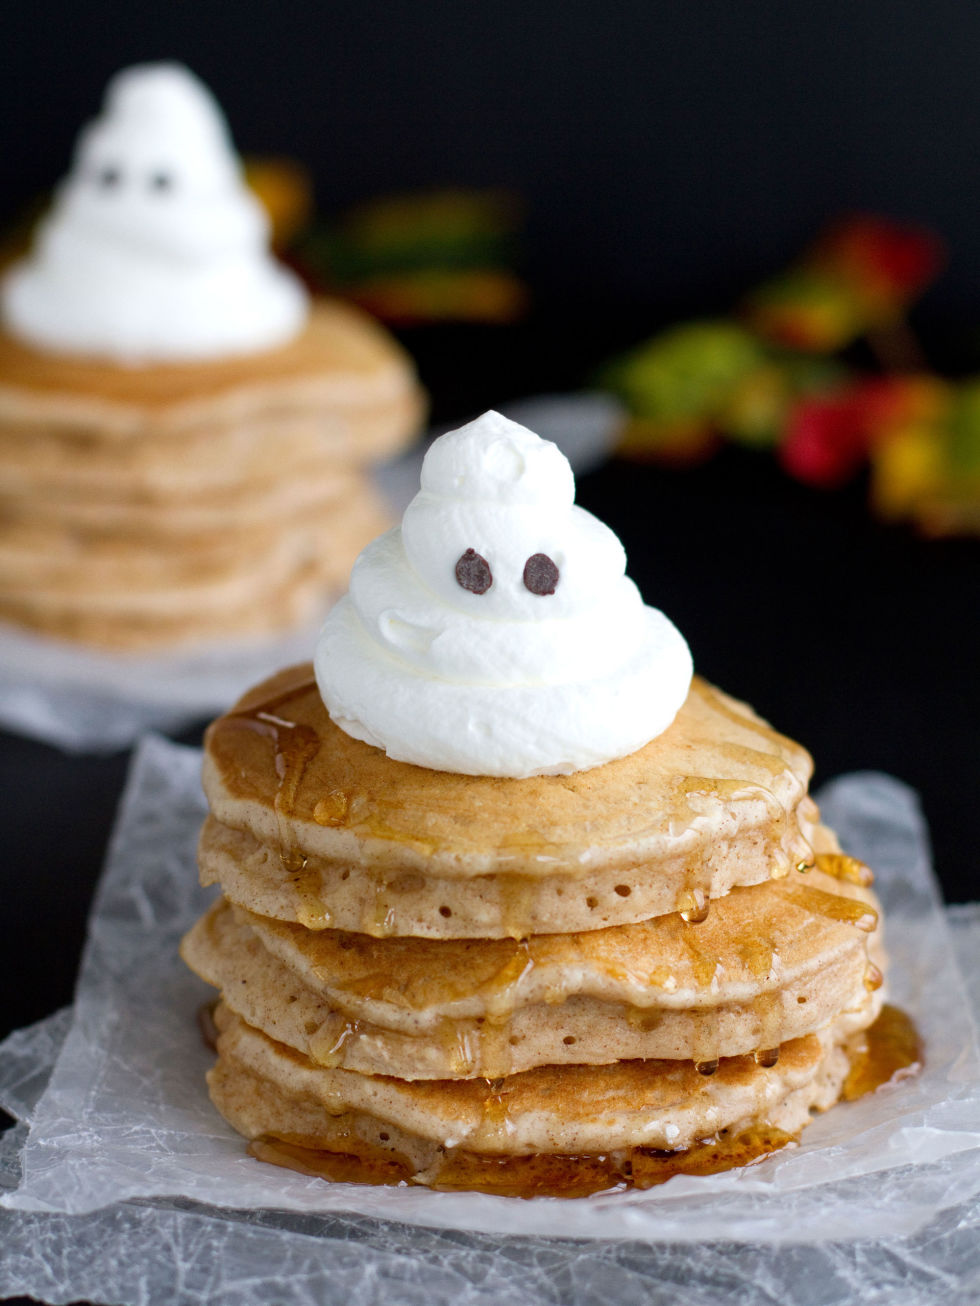 548fa6aaee91f_-_rbk-halloween-breakfast-spiced-ghost-pancakes-s2.jpg